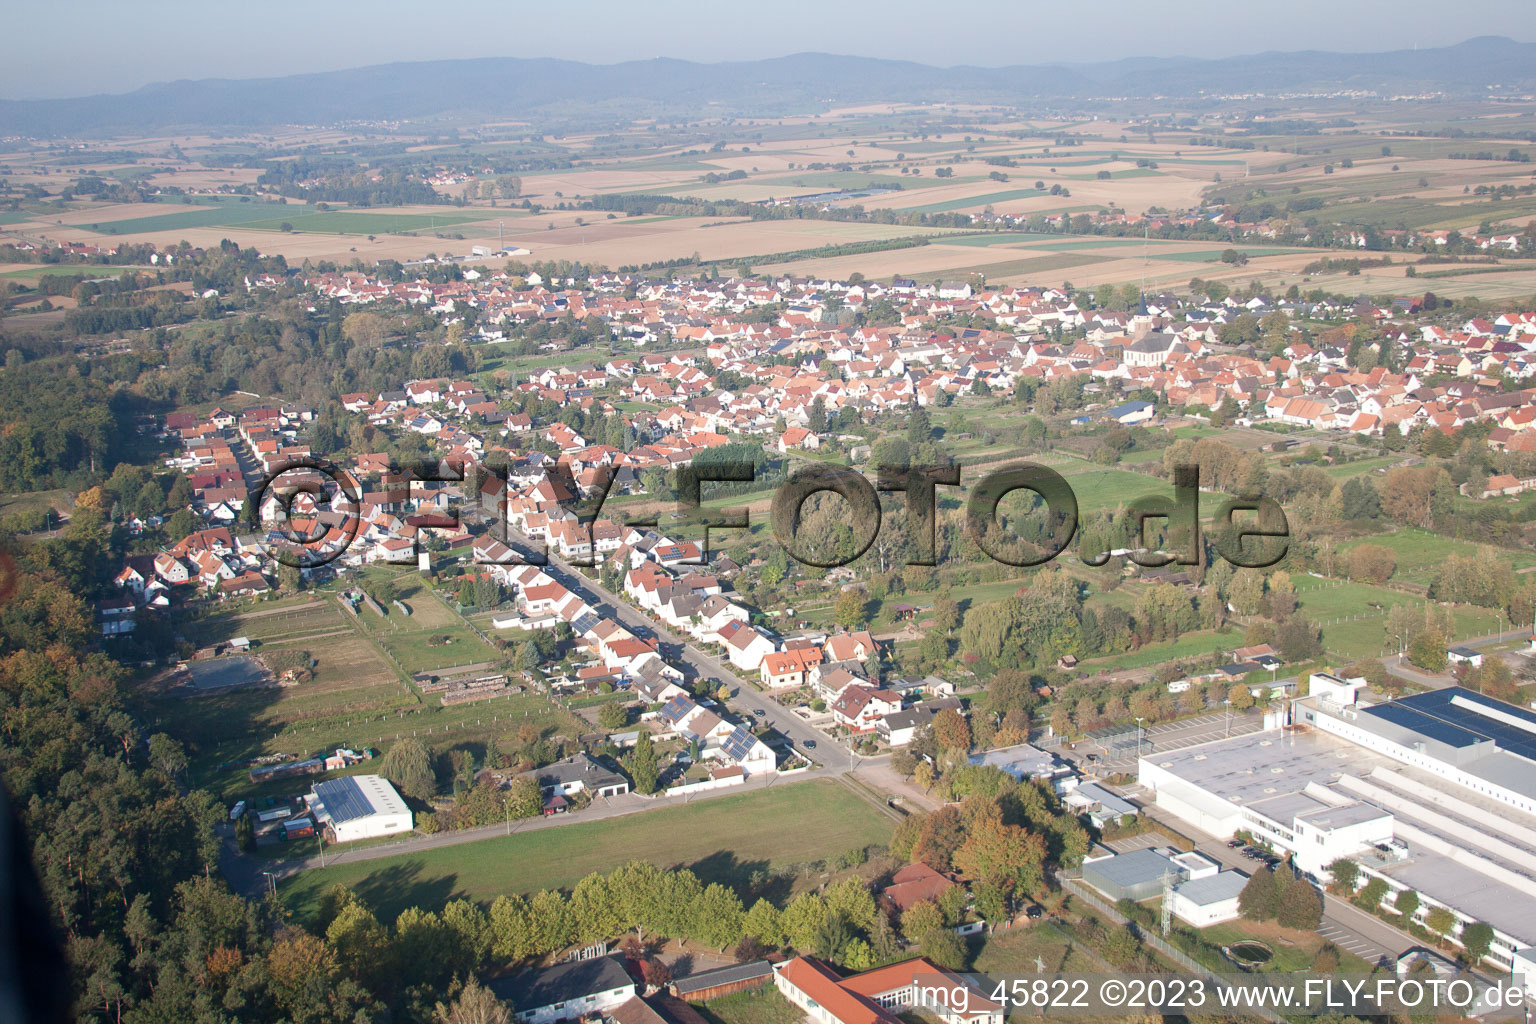 Drone image of District Schaidt in Wörth am Rhein in the state Rhineland-Palatinate, Germany